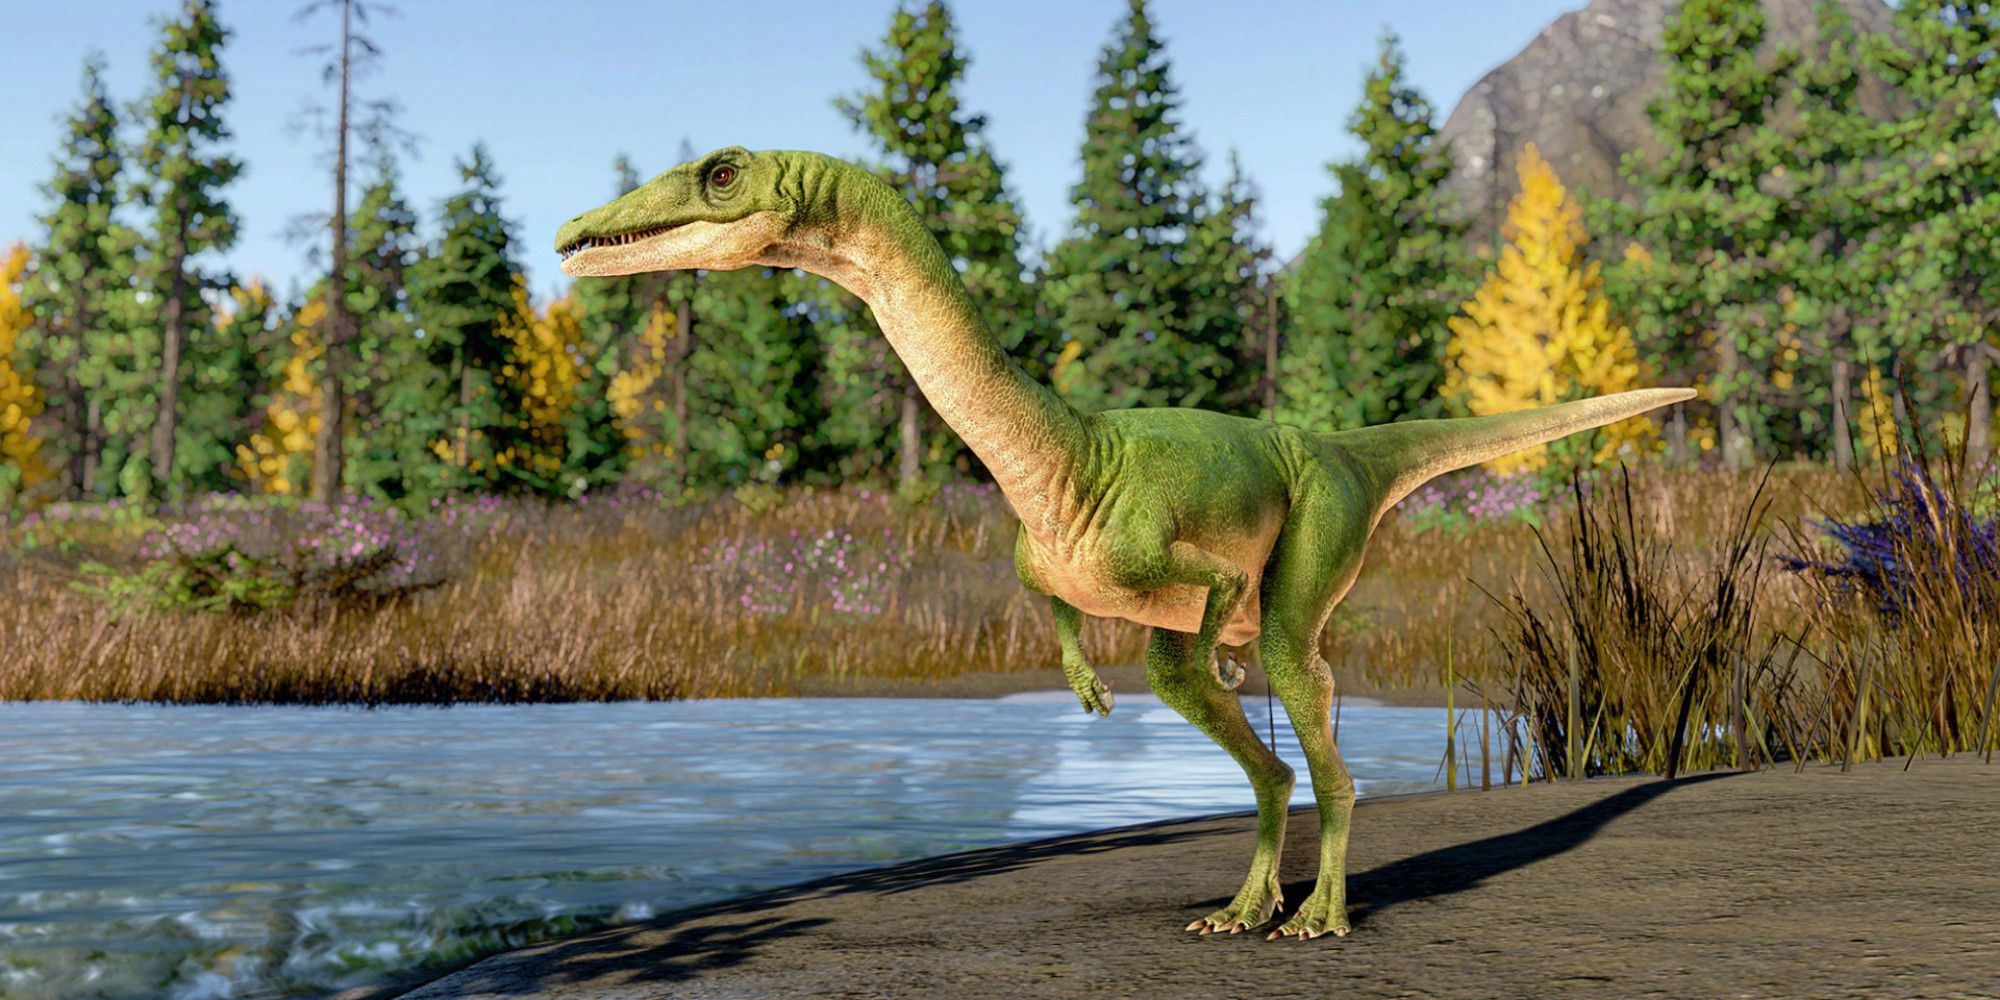 Jurassic World Evolution 2 7 Biggest Changes In The Sequel